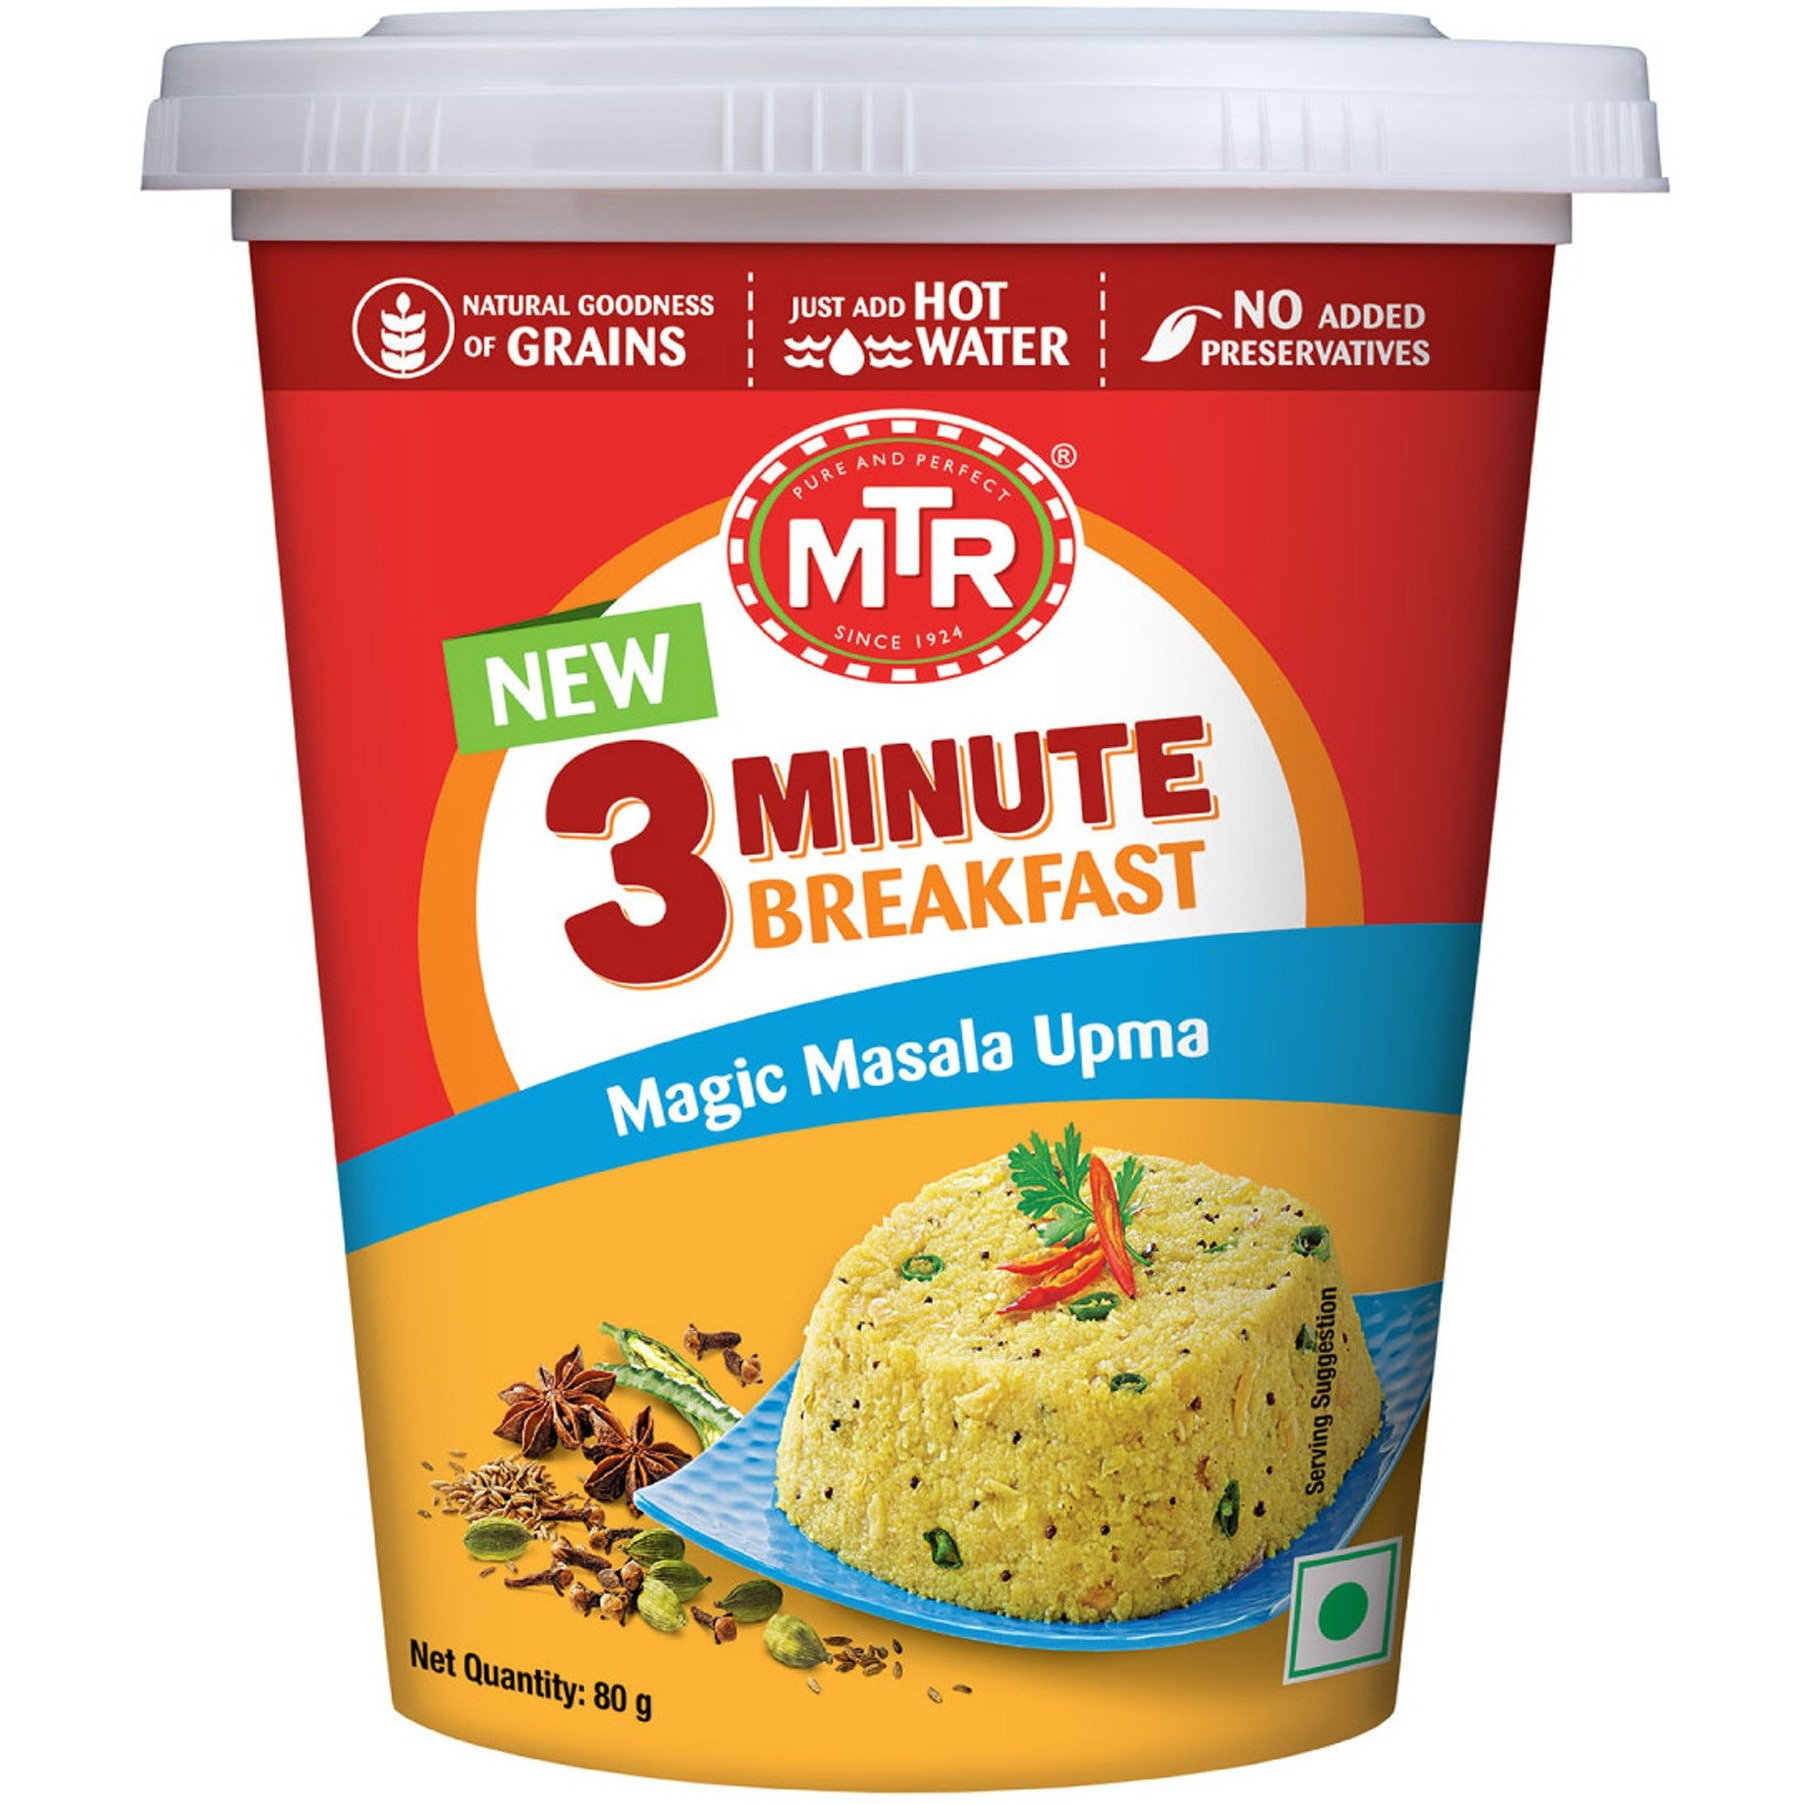 Pack of 4 - Mtr 3 Minute Breakfast Cup Magic Masala Upma - 79 Gm (2.82 Oz)